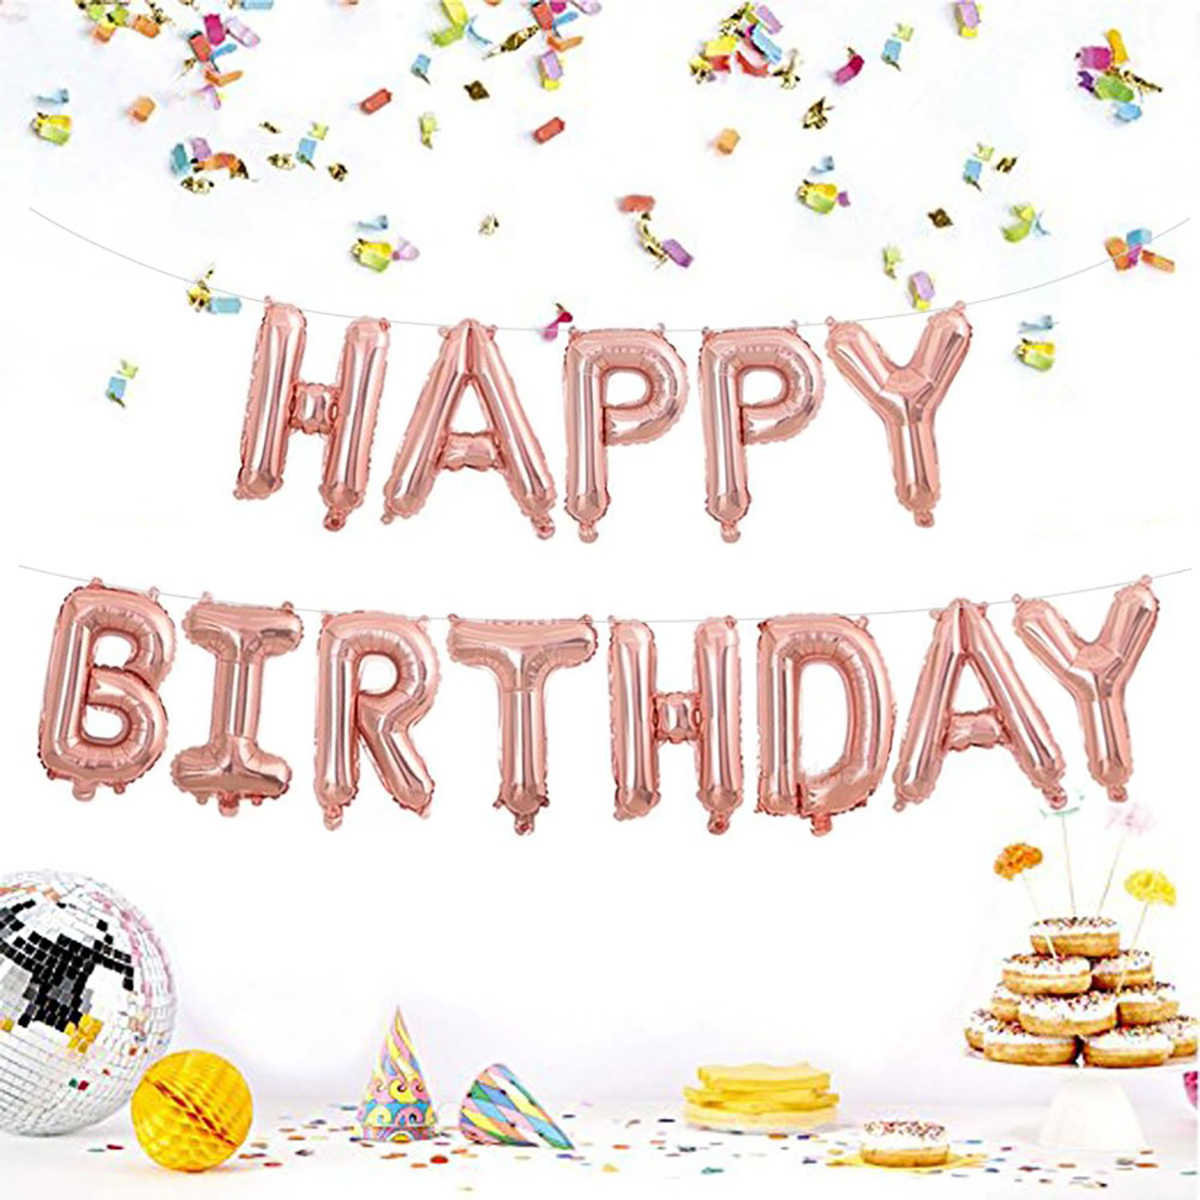 quotHappy-Birthdayquot-Aluminum-Foil-Balloon-Confetti-Birthday-Decoration-Set-For-Birthday-Party-Dec-1926326-2